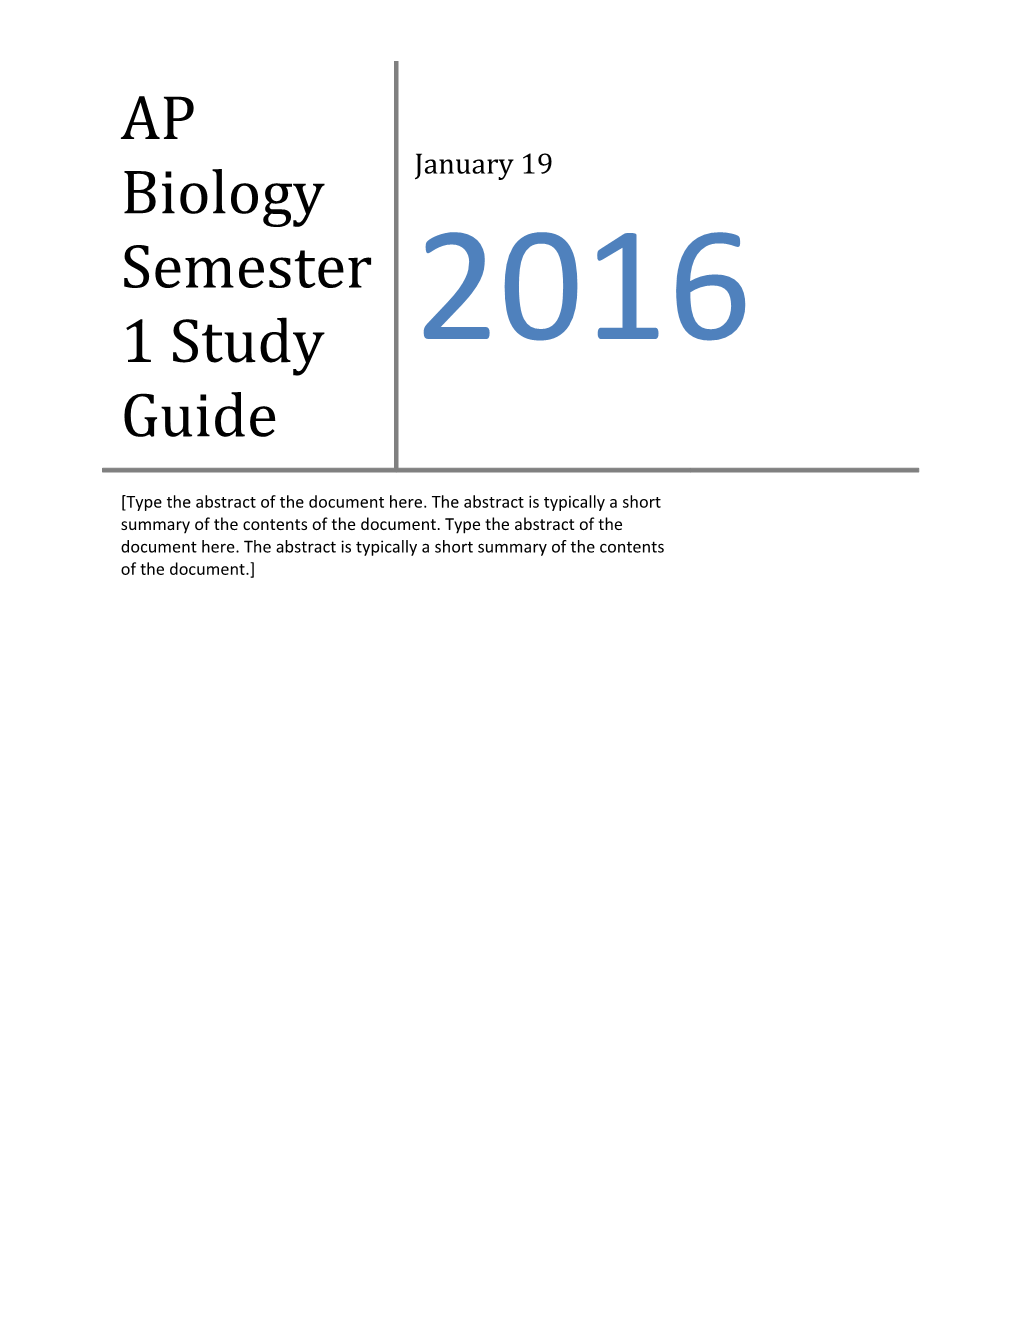 AP Biology Semester 1 Study Guide